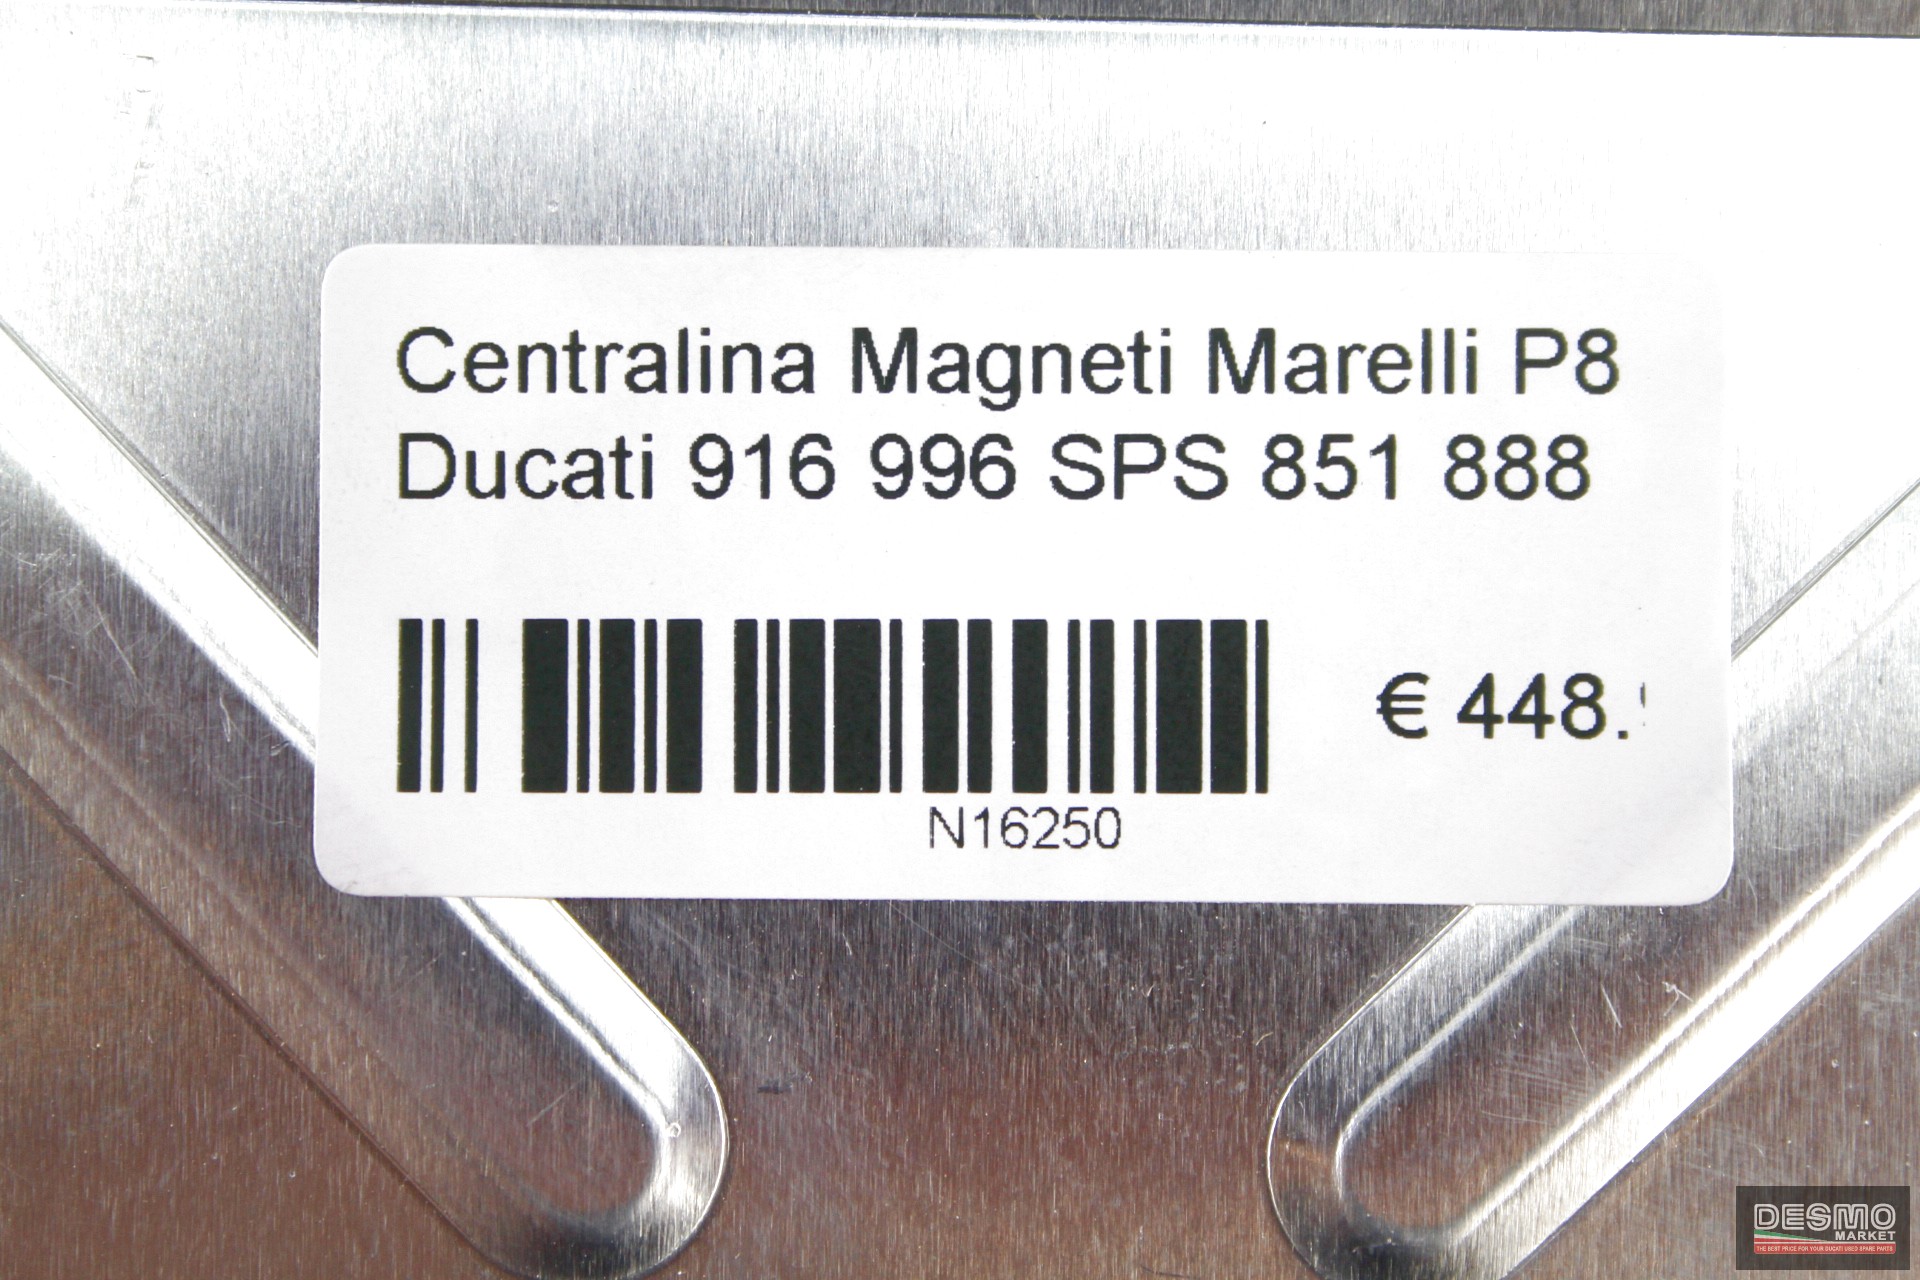 Centralina Magneti Marelli P8 Ducati 916 996 SPS 851 888